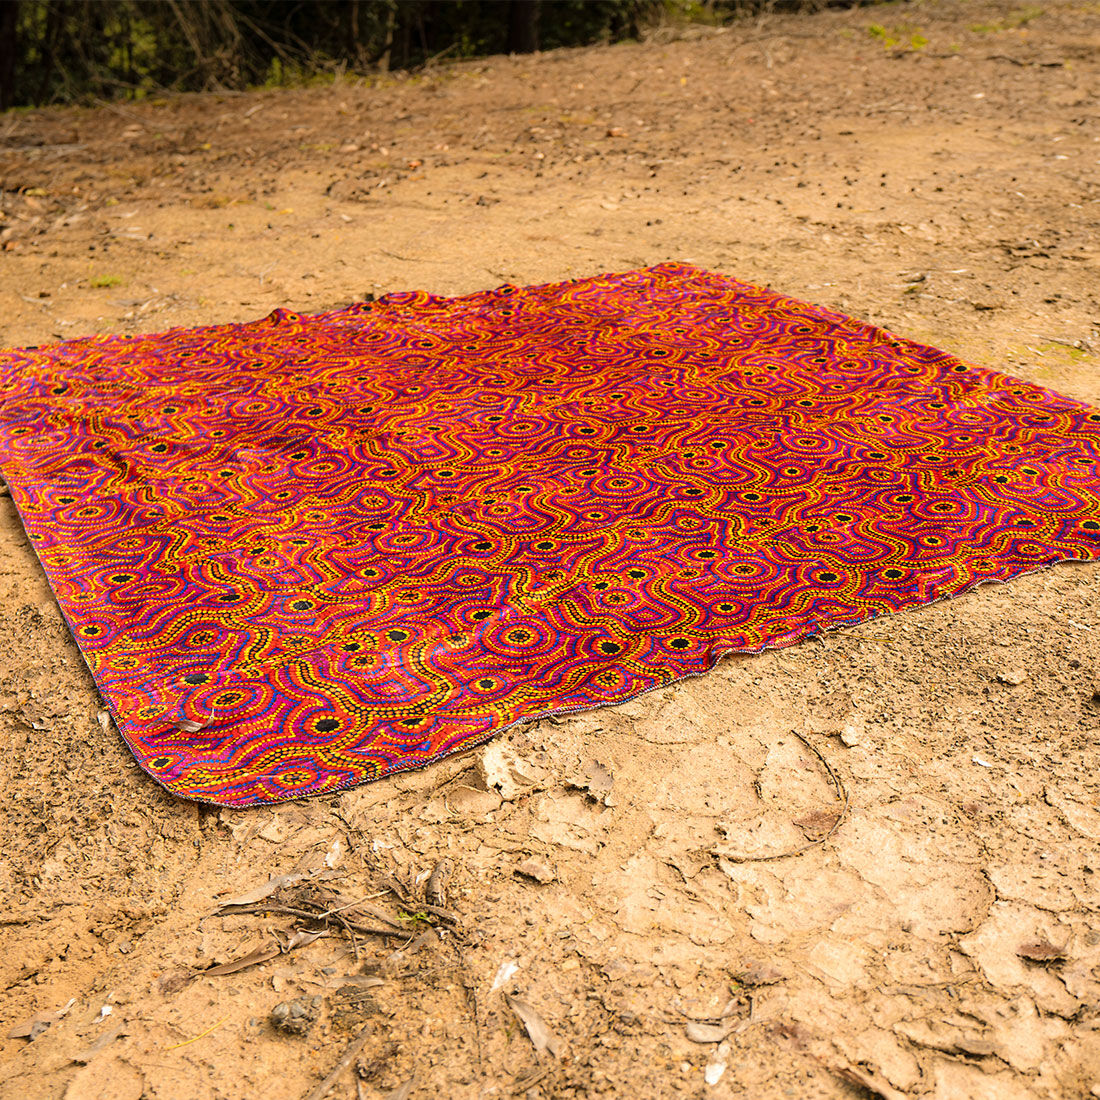 Snake Dreaming Repreve Travel Blanket Dot 150cm x 150cm, , scaau_hi-res